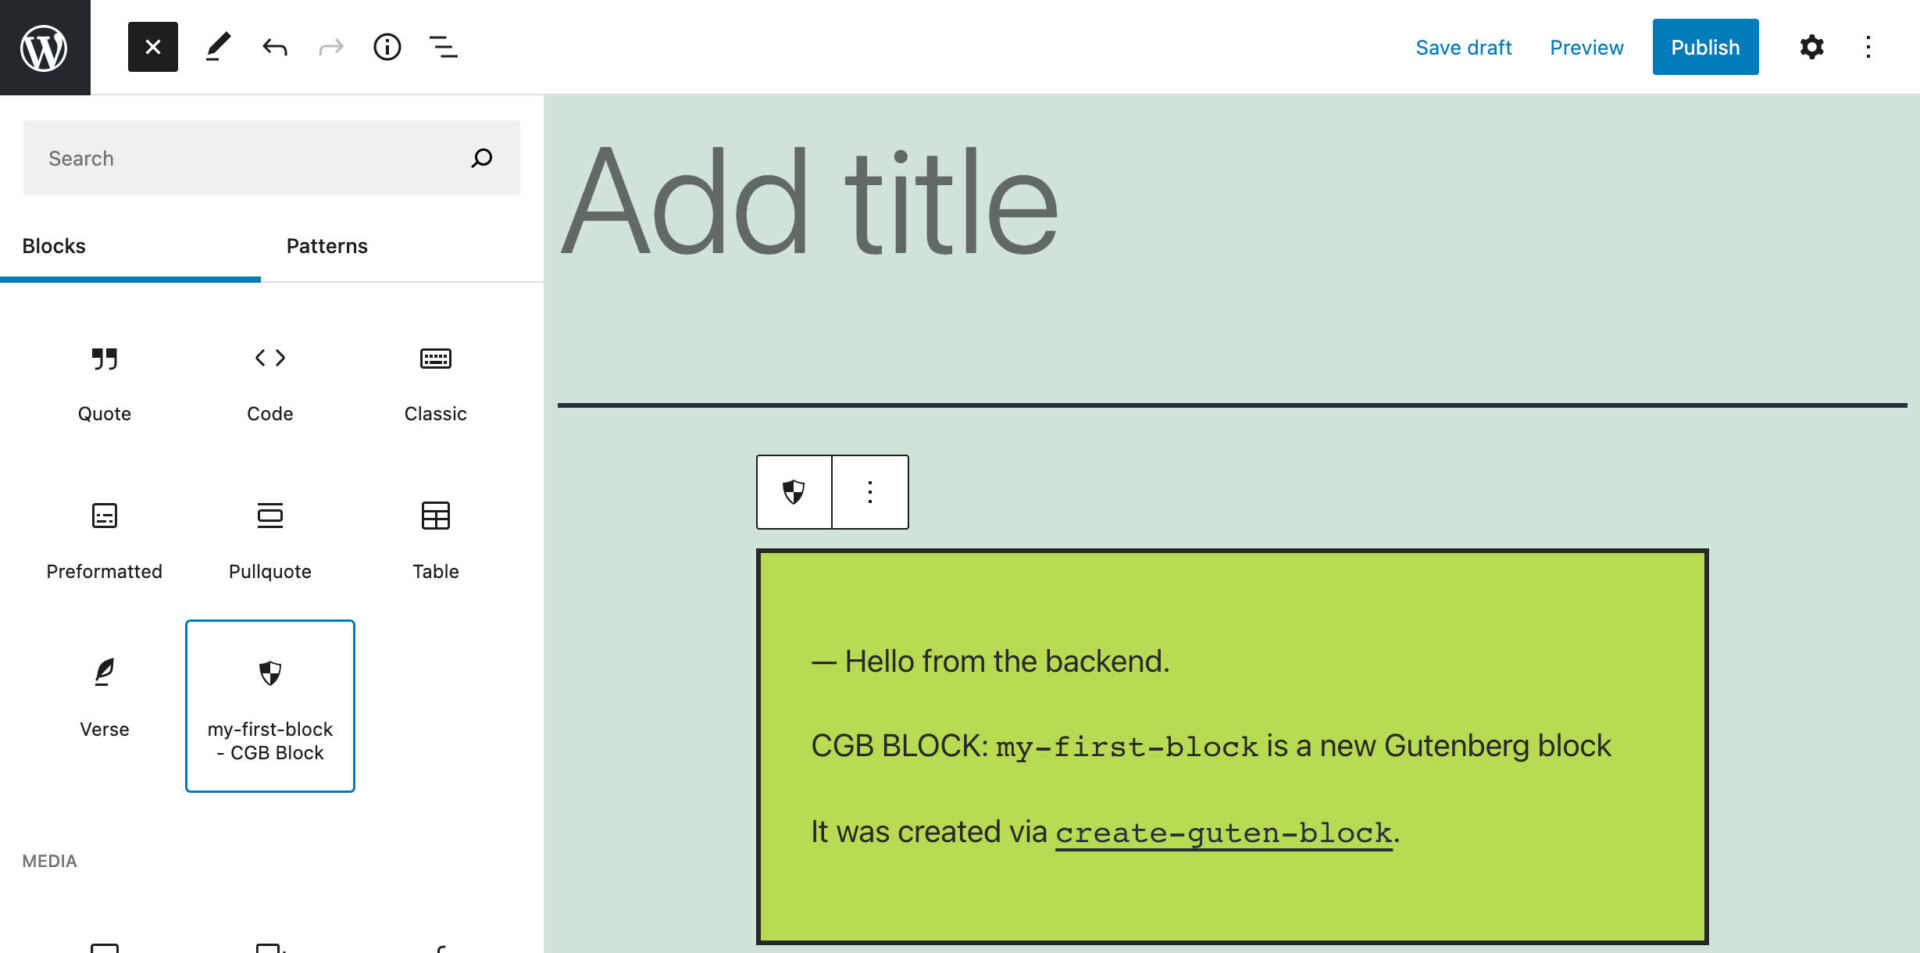 A new block created with create-guten-block.